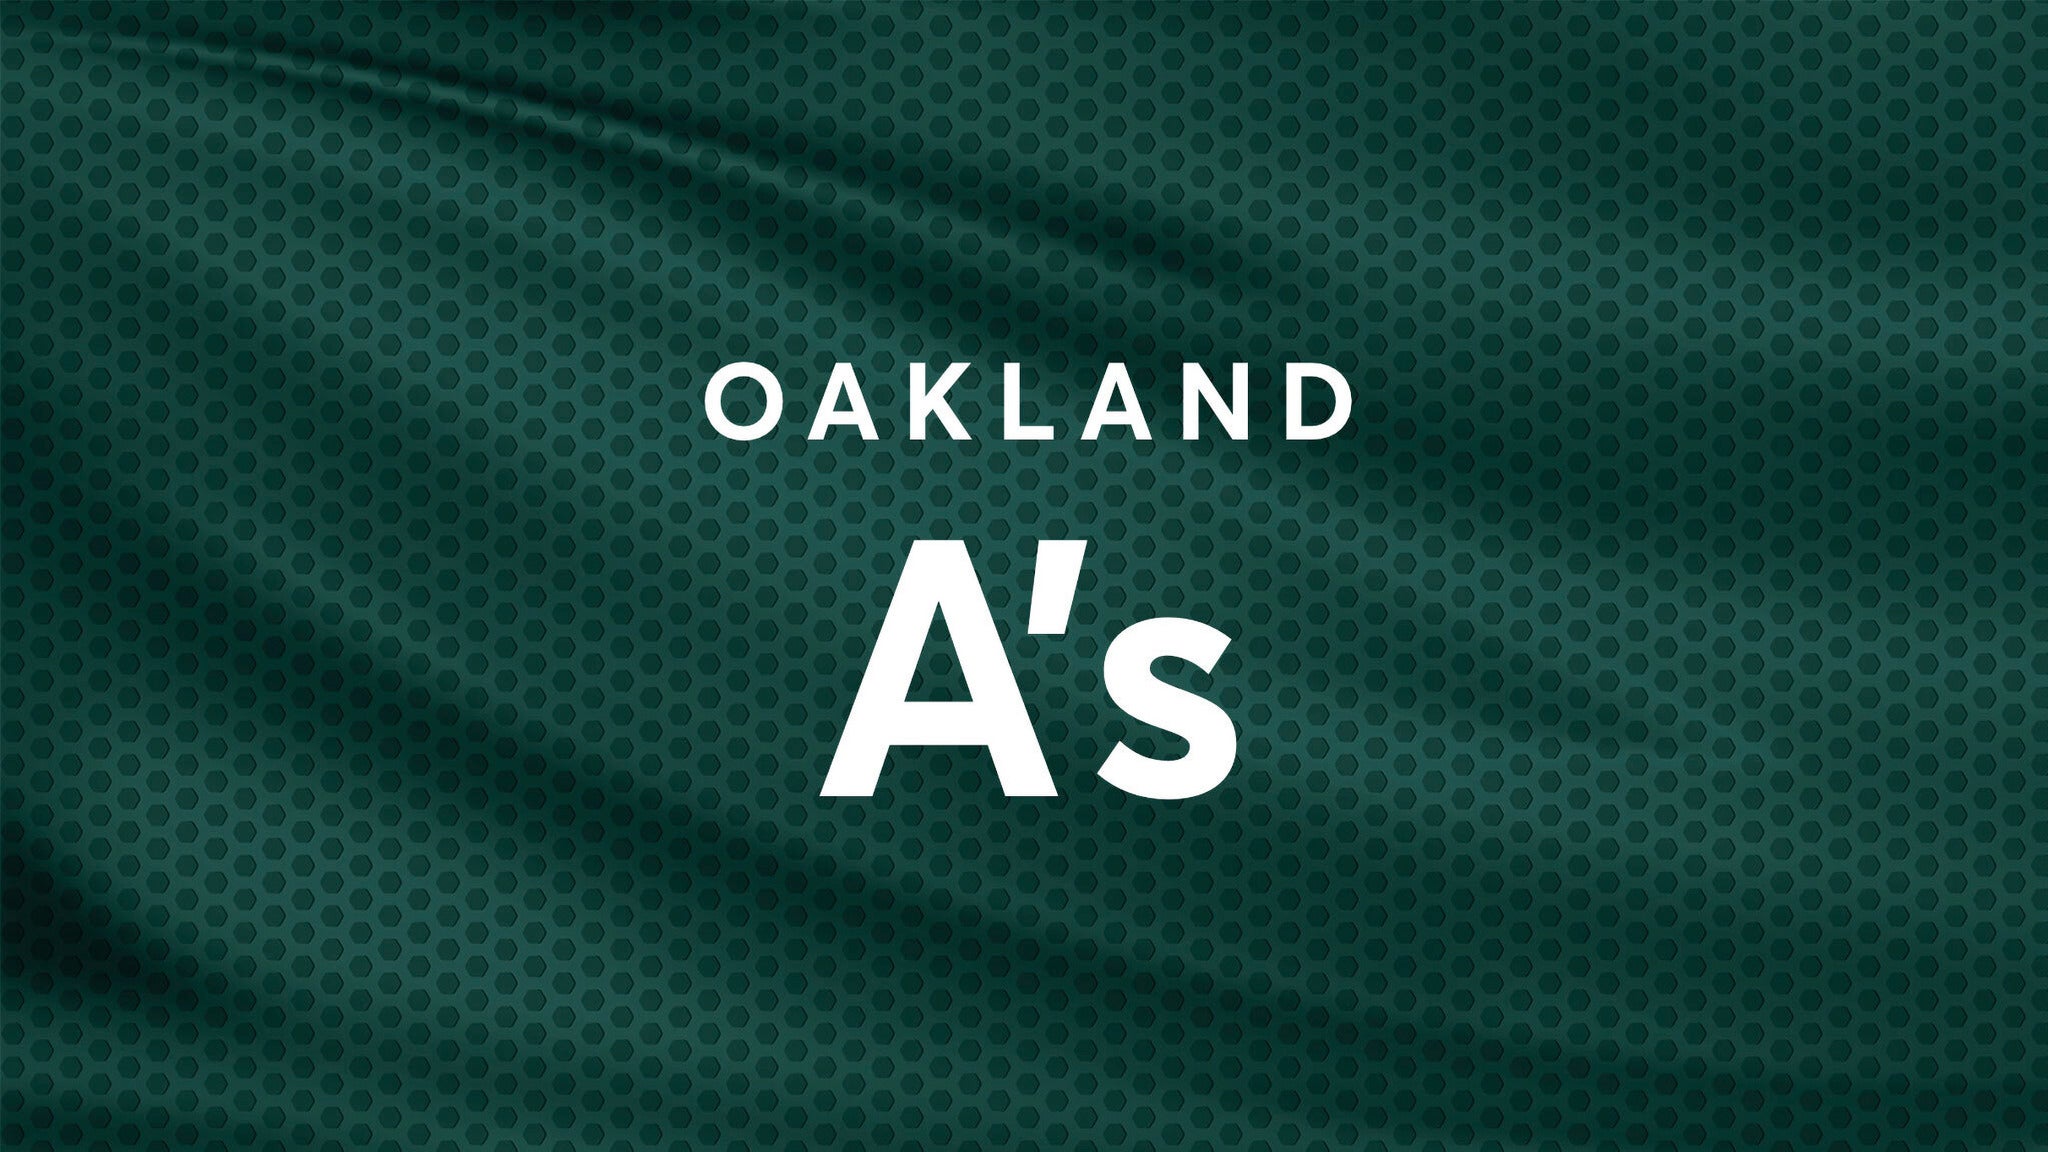 Oakland Athletics vs. San Francisco Giants